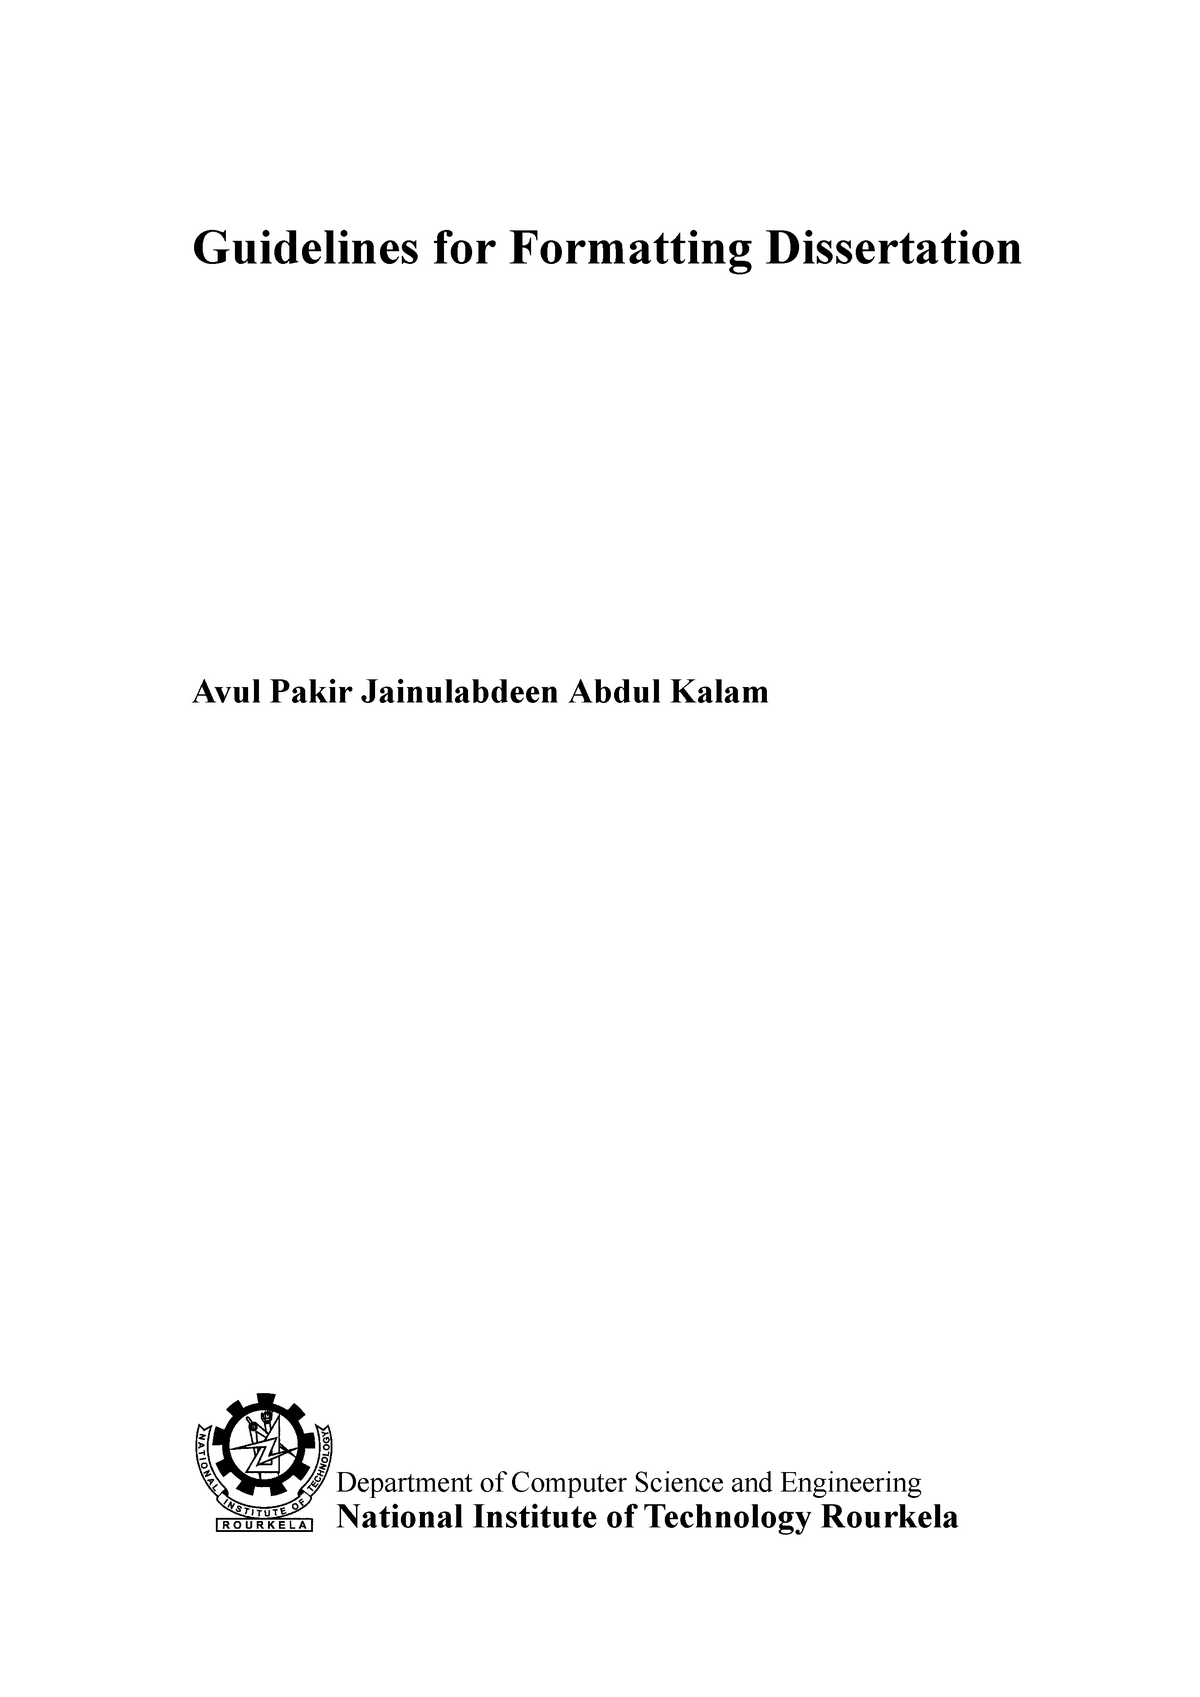 dissertation formatting guidelines